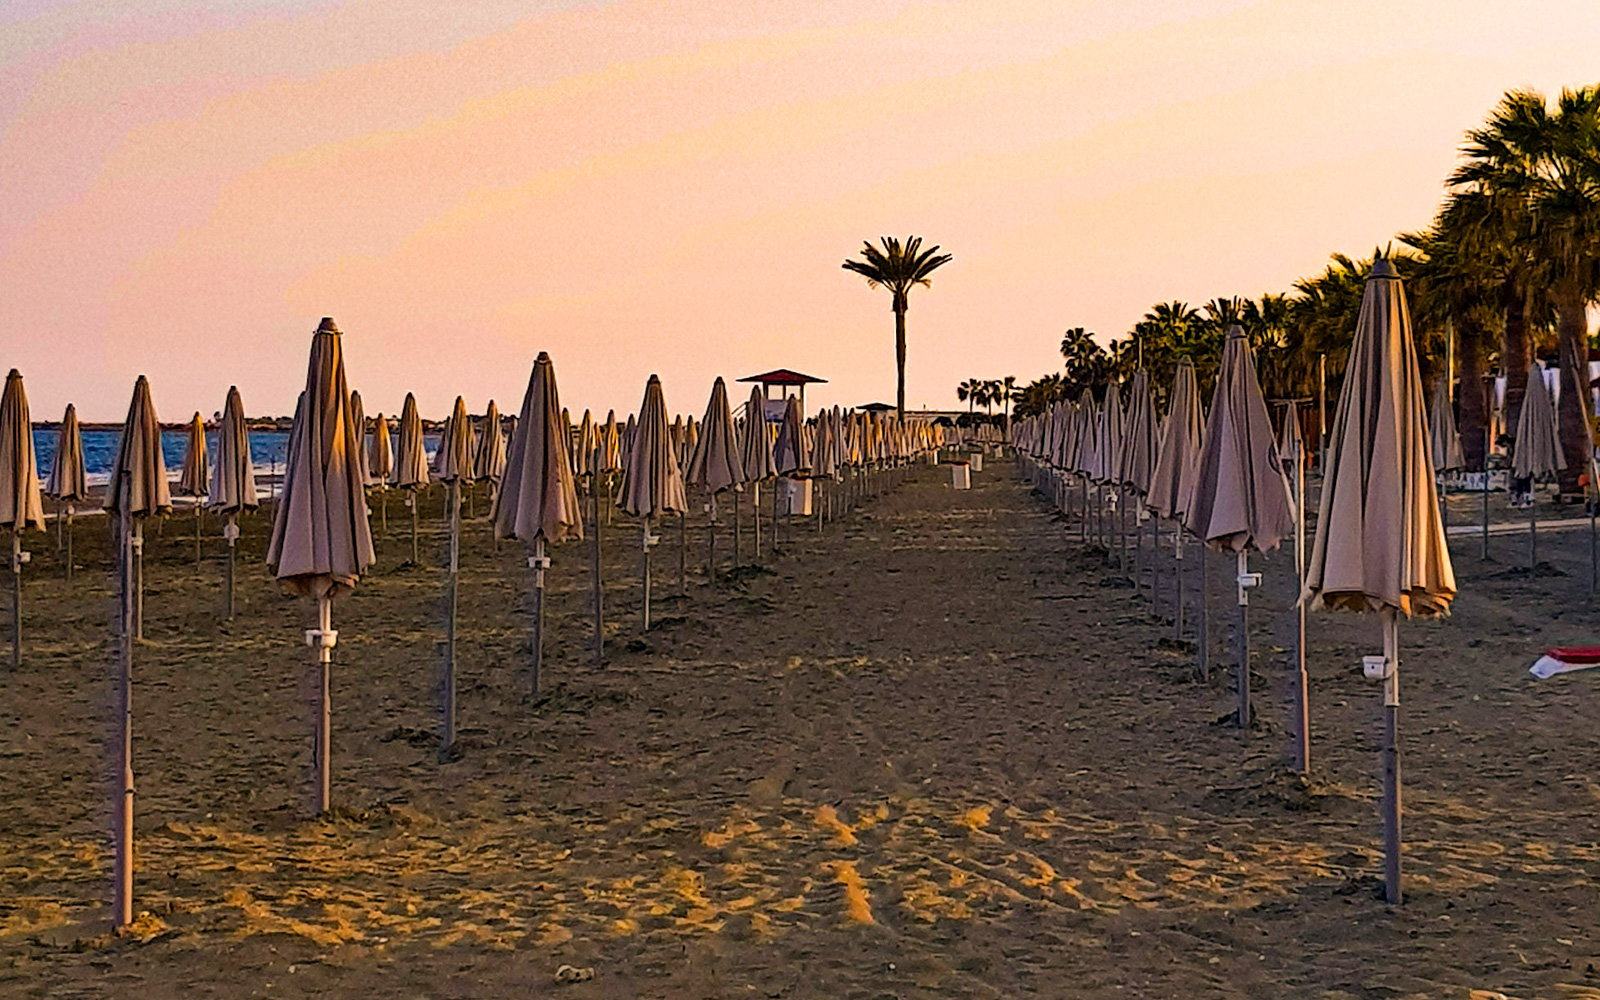 Mckenzie Beach in Cyprus